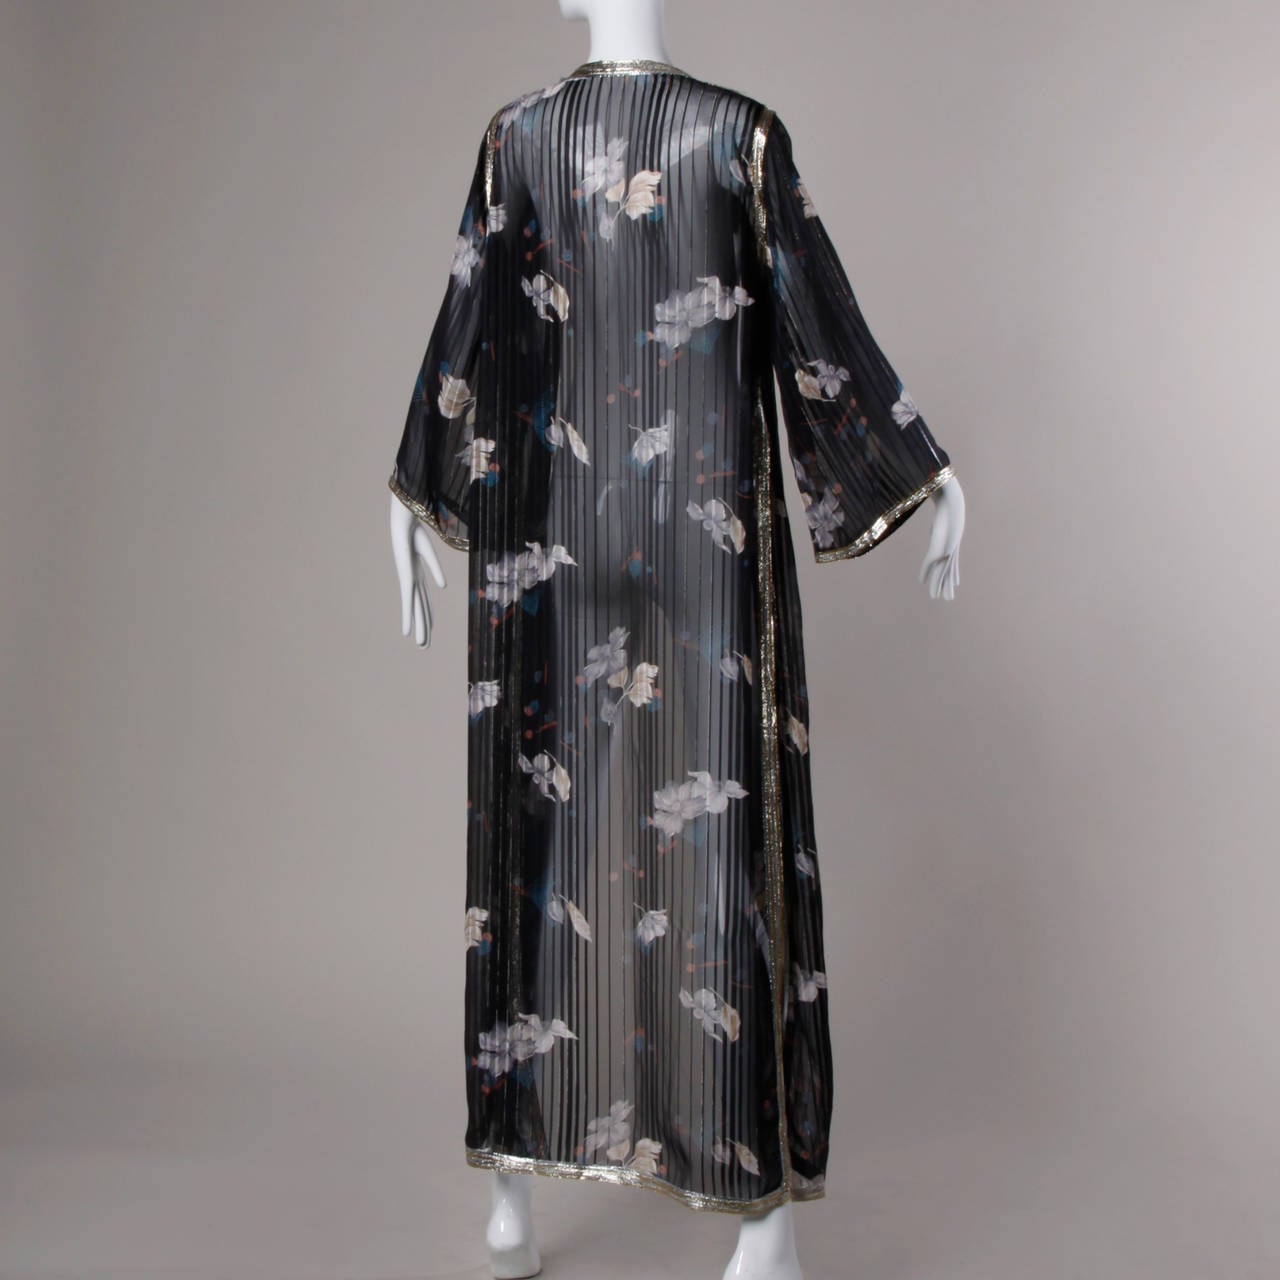 Women's 1970s Silky Sheer Metallic Floral Print Duster or Kimono Jacket